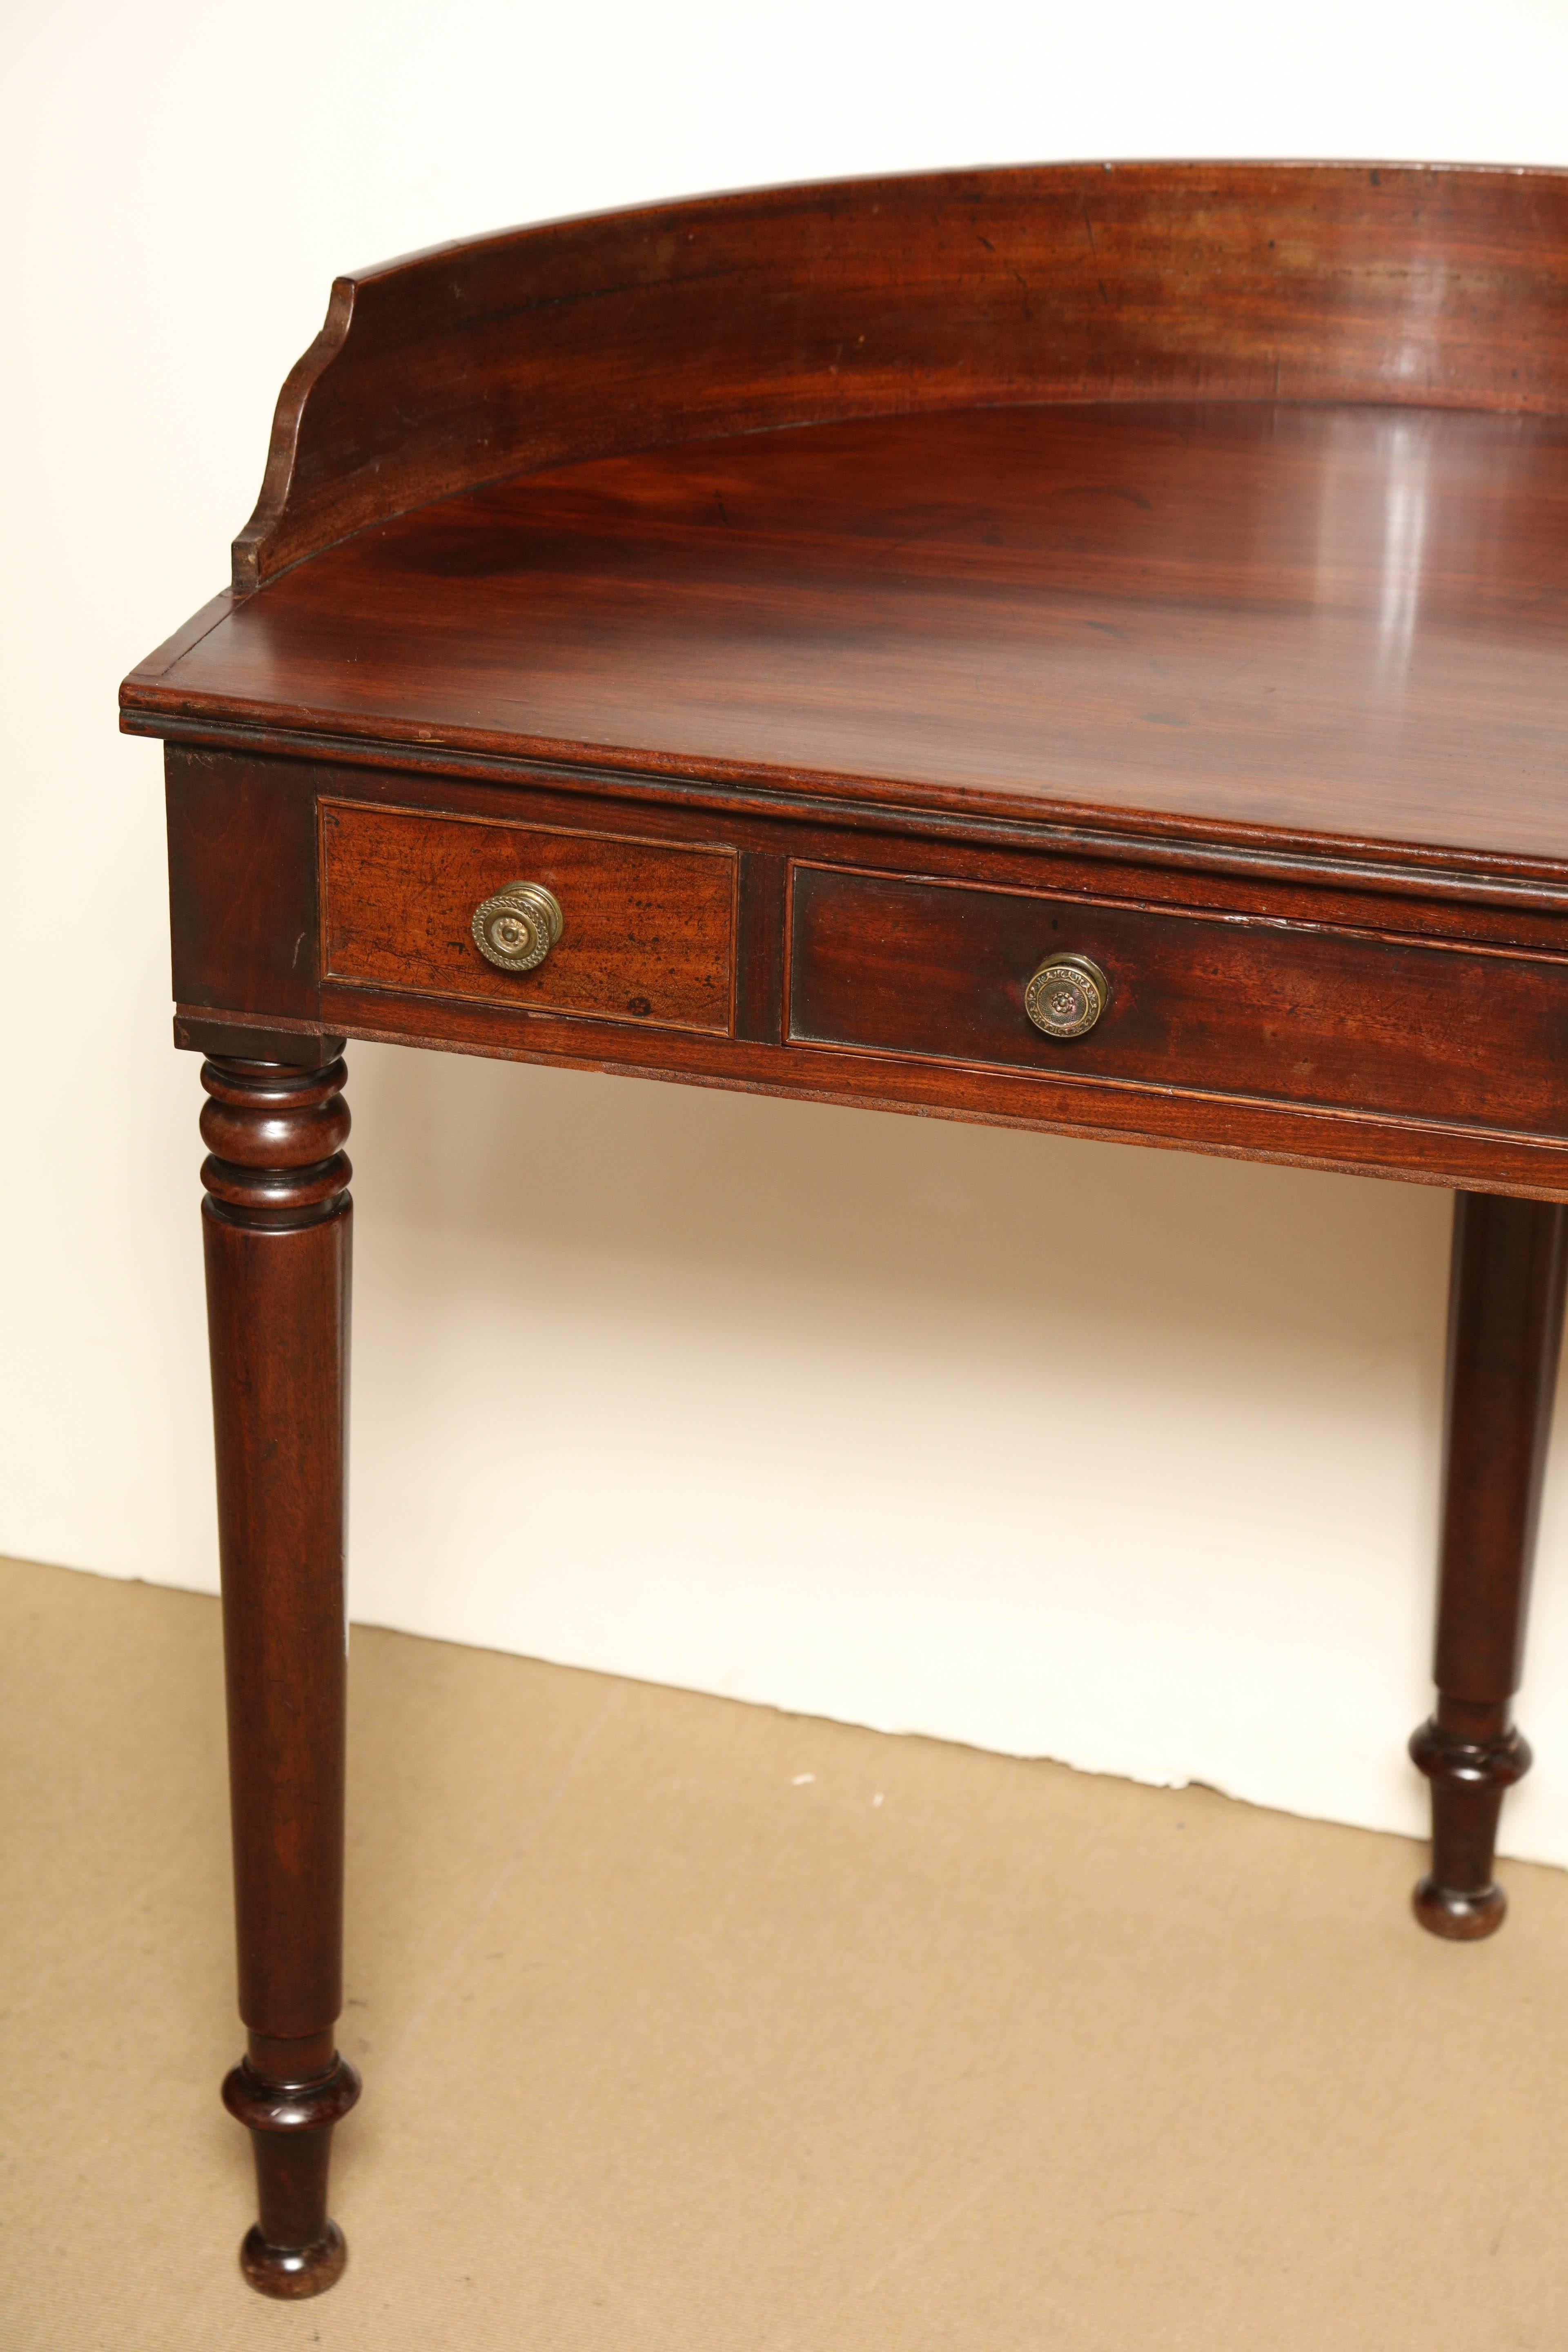 Mid-19th century Irish, Reverse demilune, mahogany desk-dressing table with one drawer.